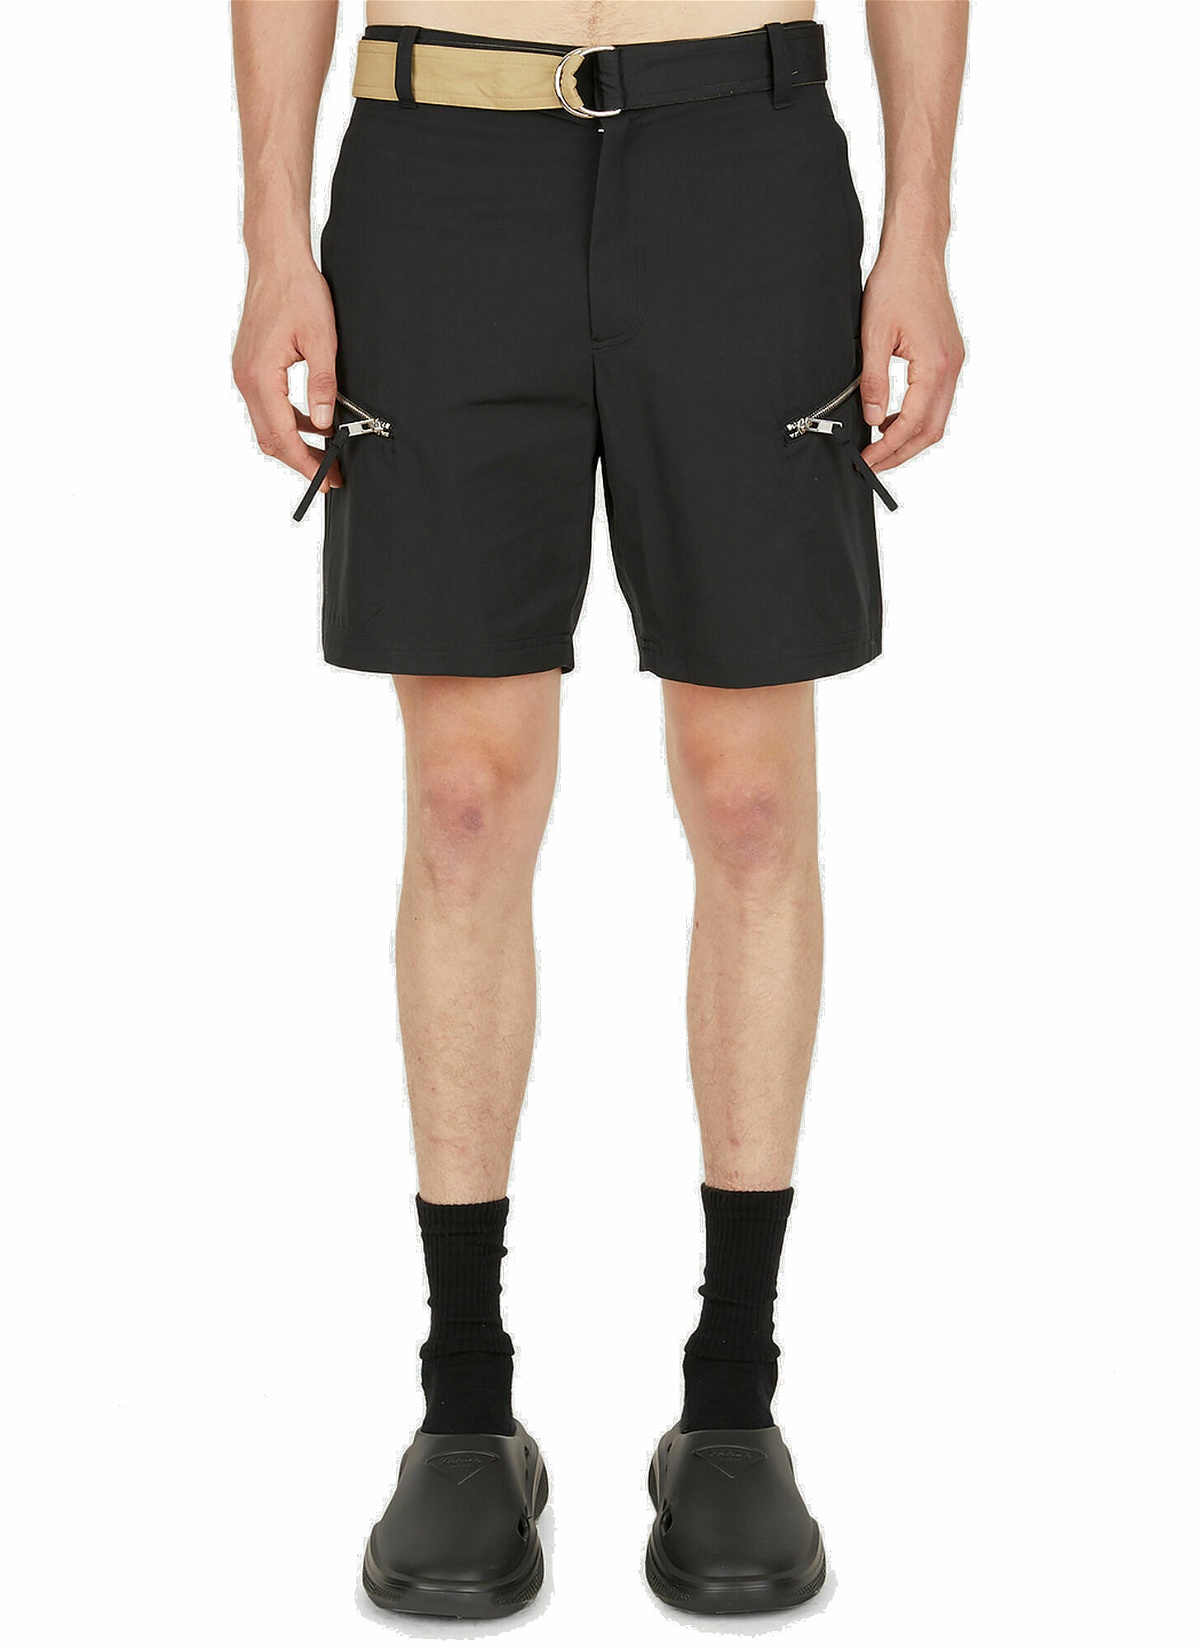 Zip Shorts in Black Helmut Lang